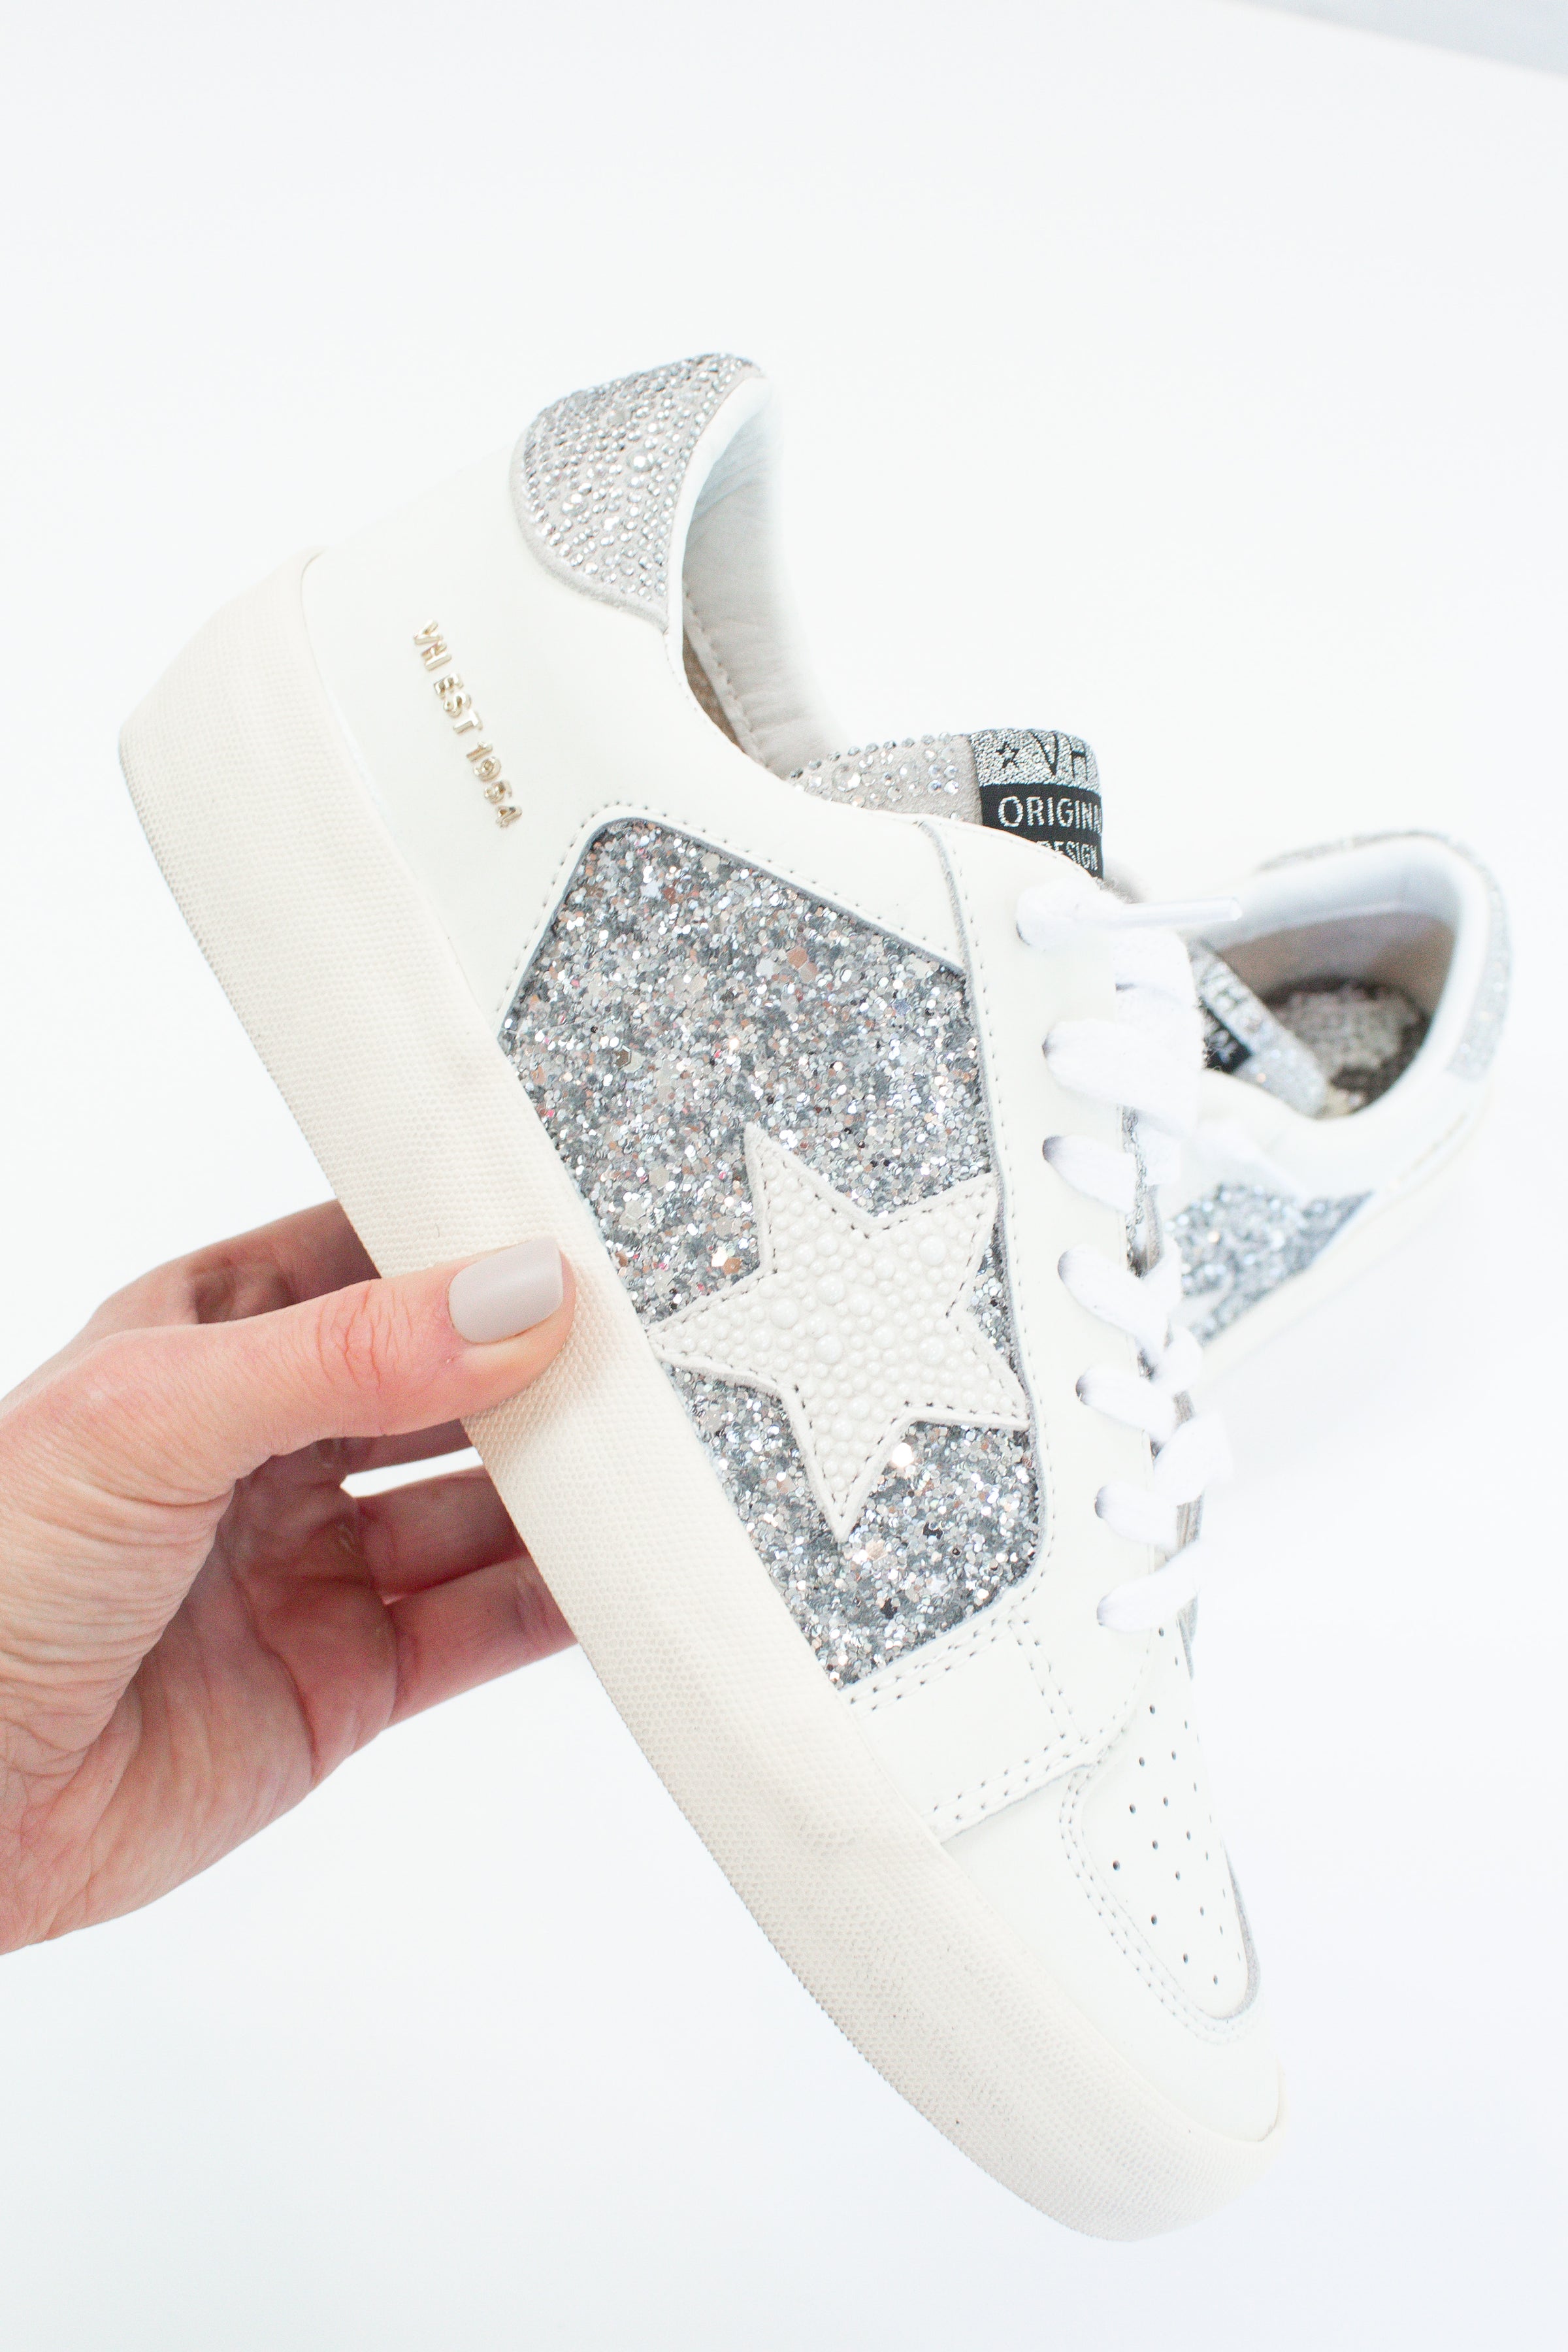 VH Lana Glitter Sneakers 6